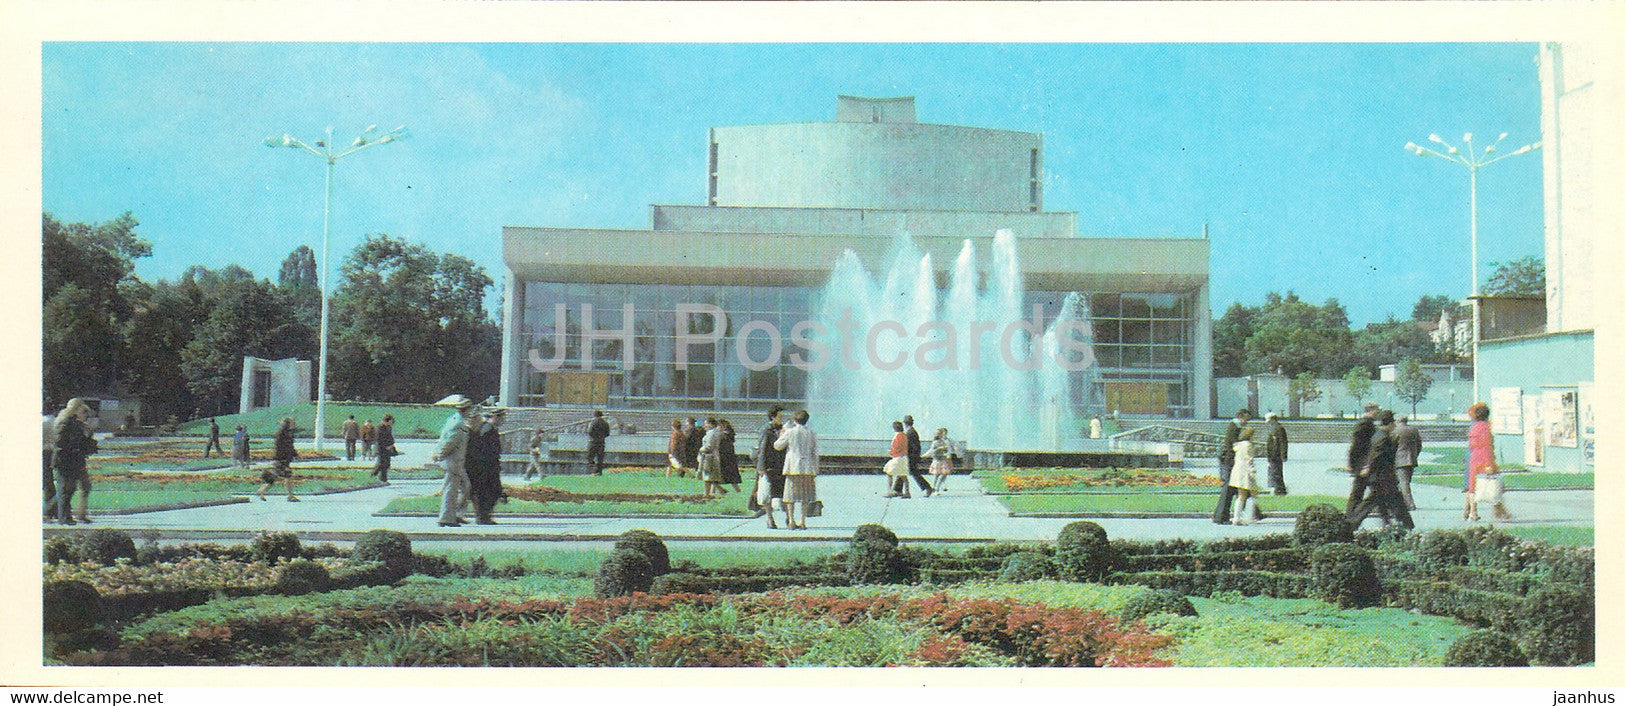 Essentuki - guest performance theatre - 1983 - Russia USSR - unused - JH Postcards